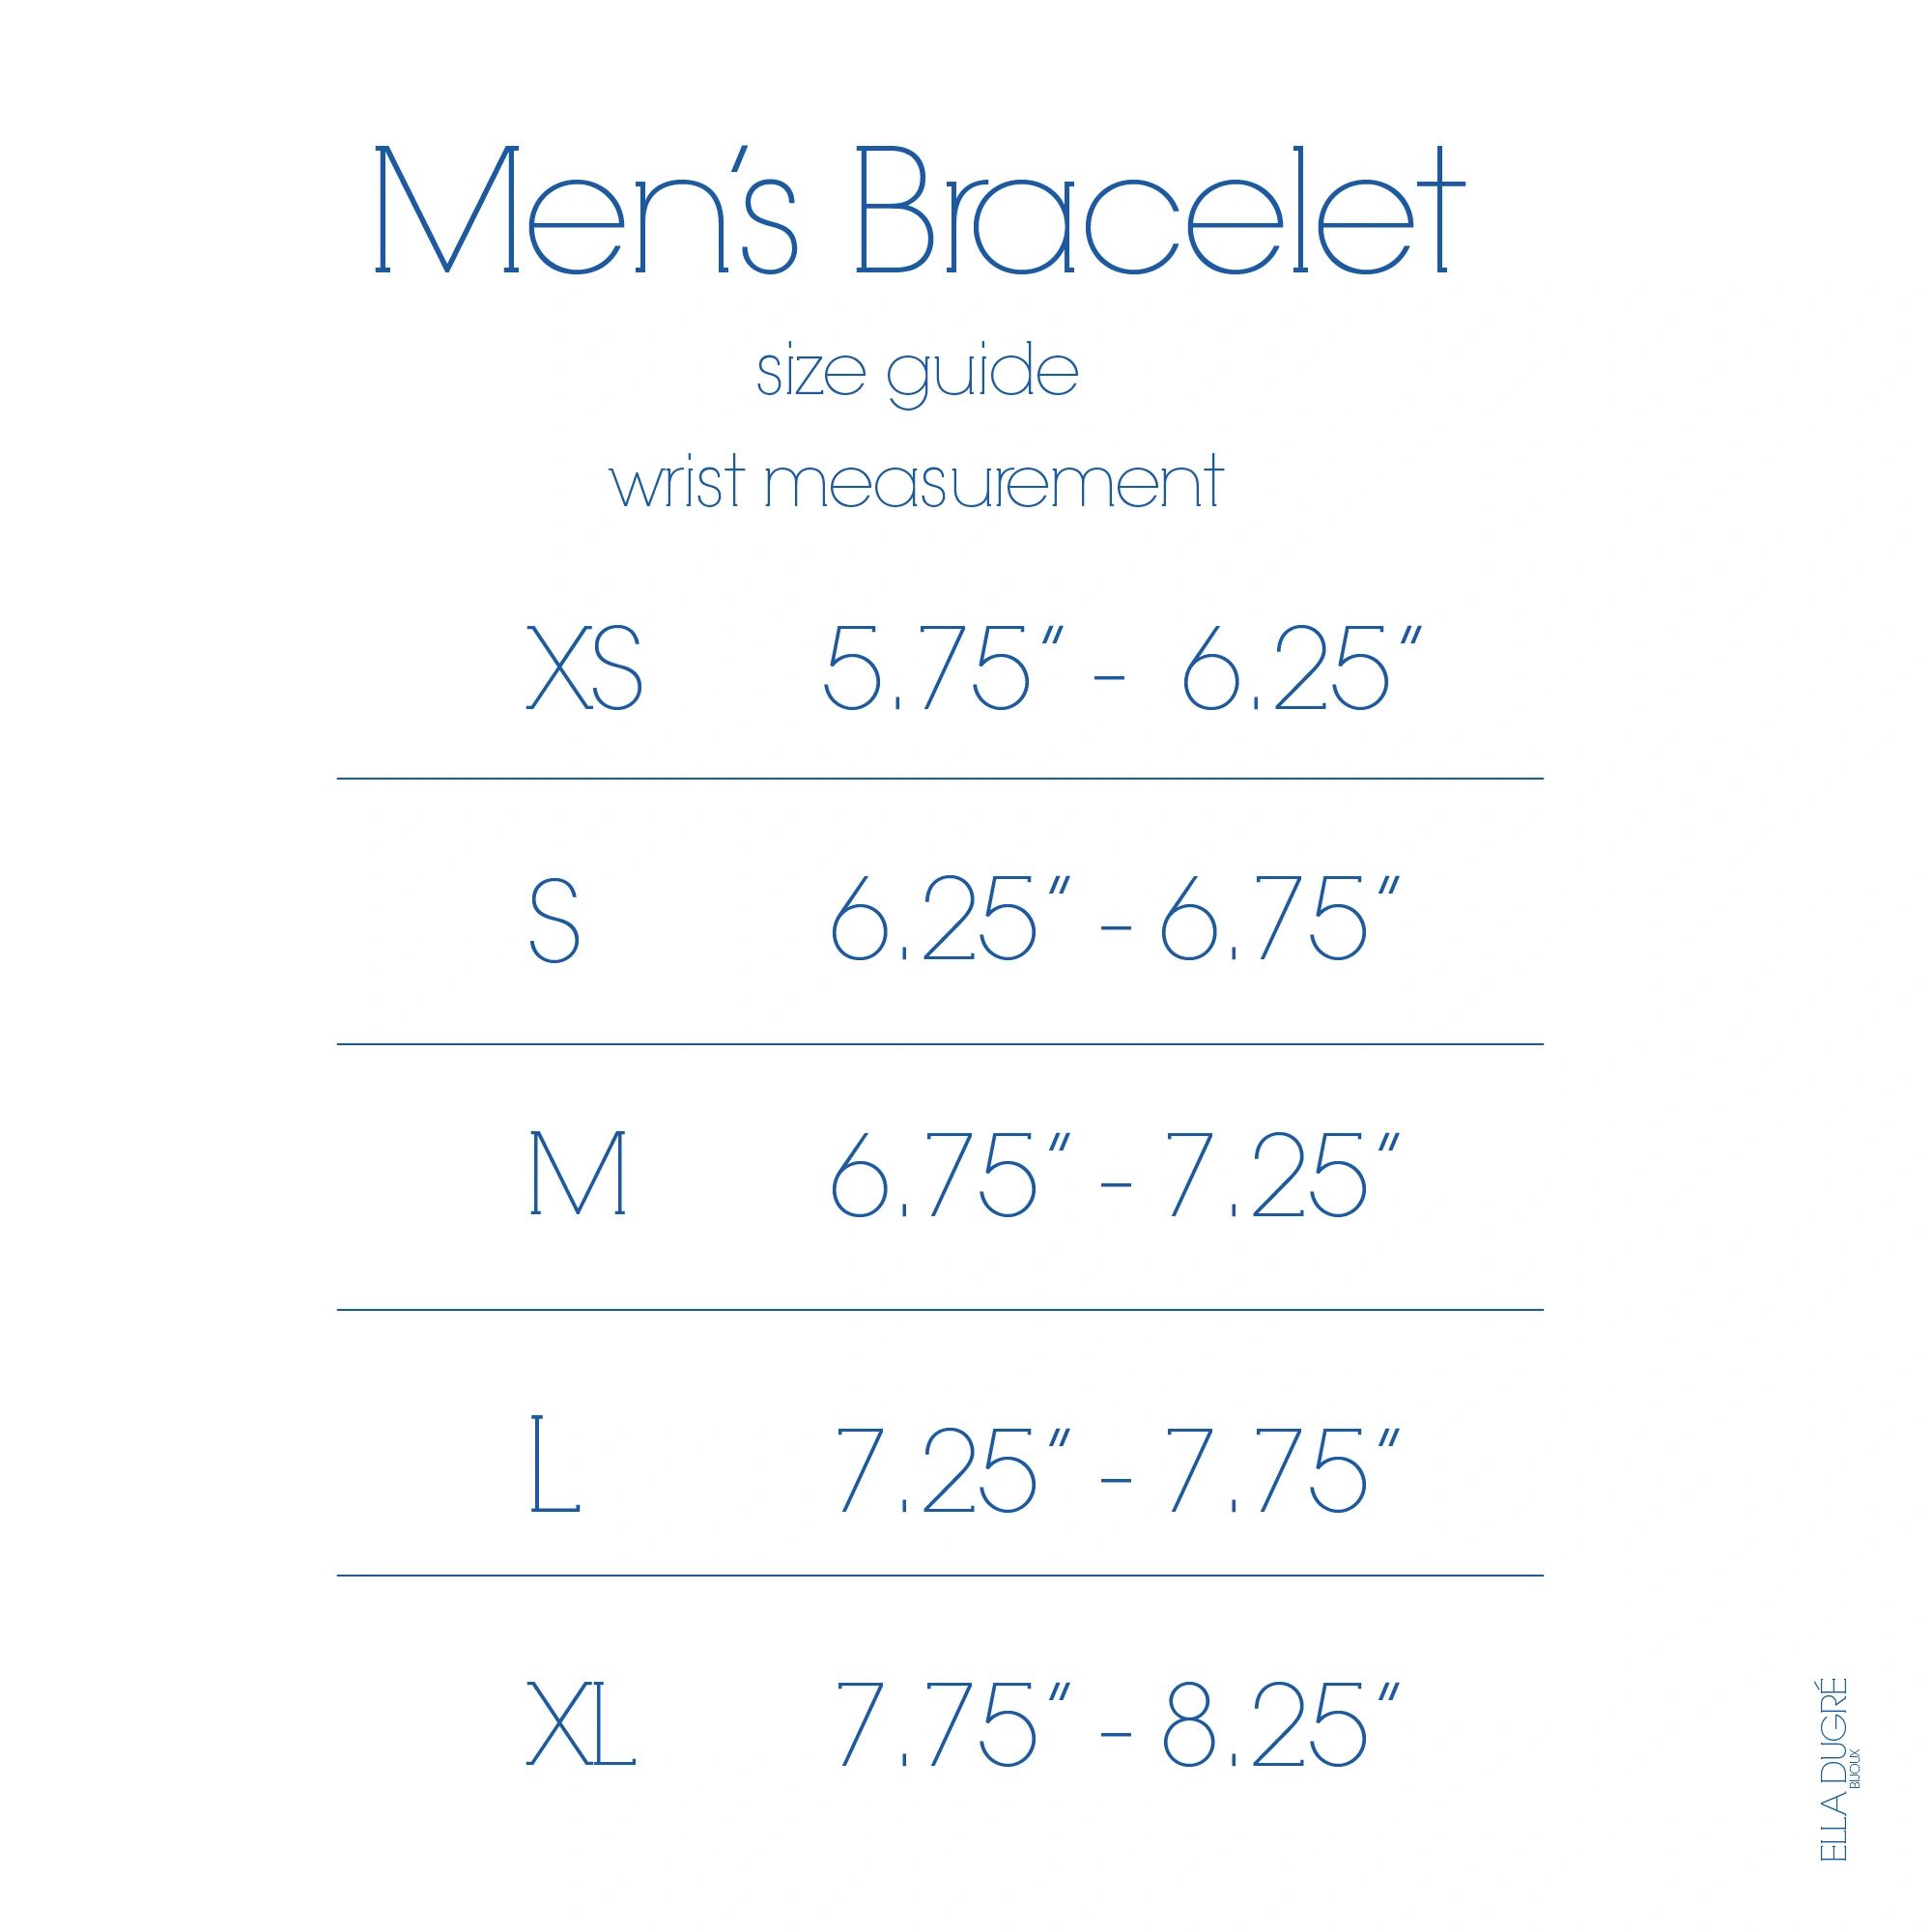 Men's Bracelet Size Chart
Ella Dugre
